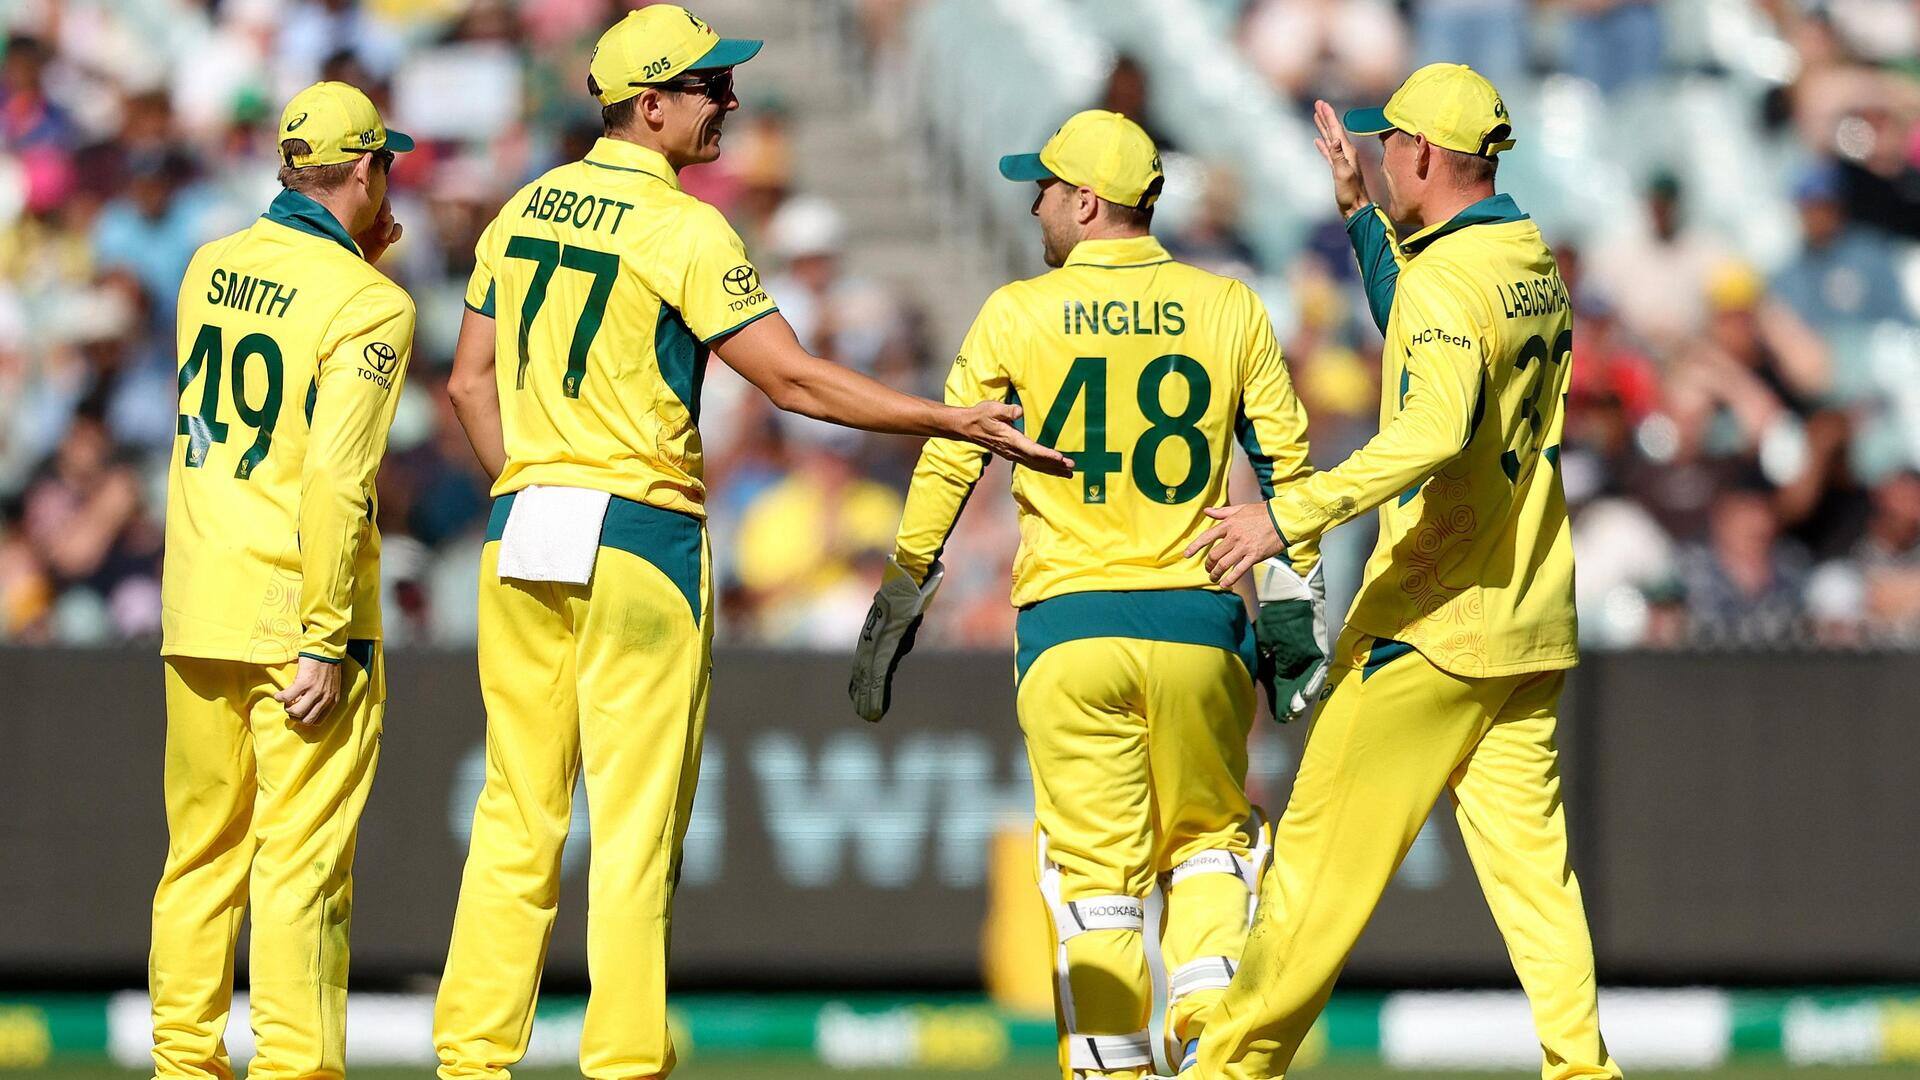 Australia's Sean Abbott breaks these records in ODI cricket